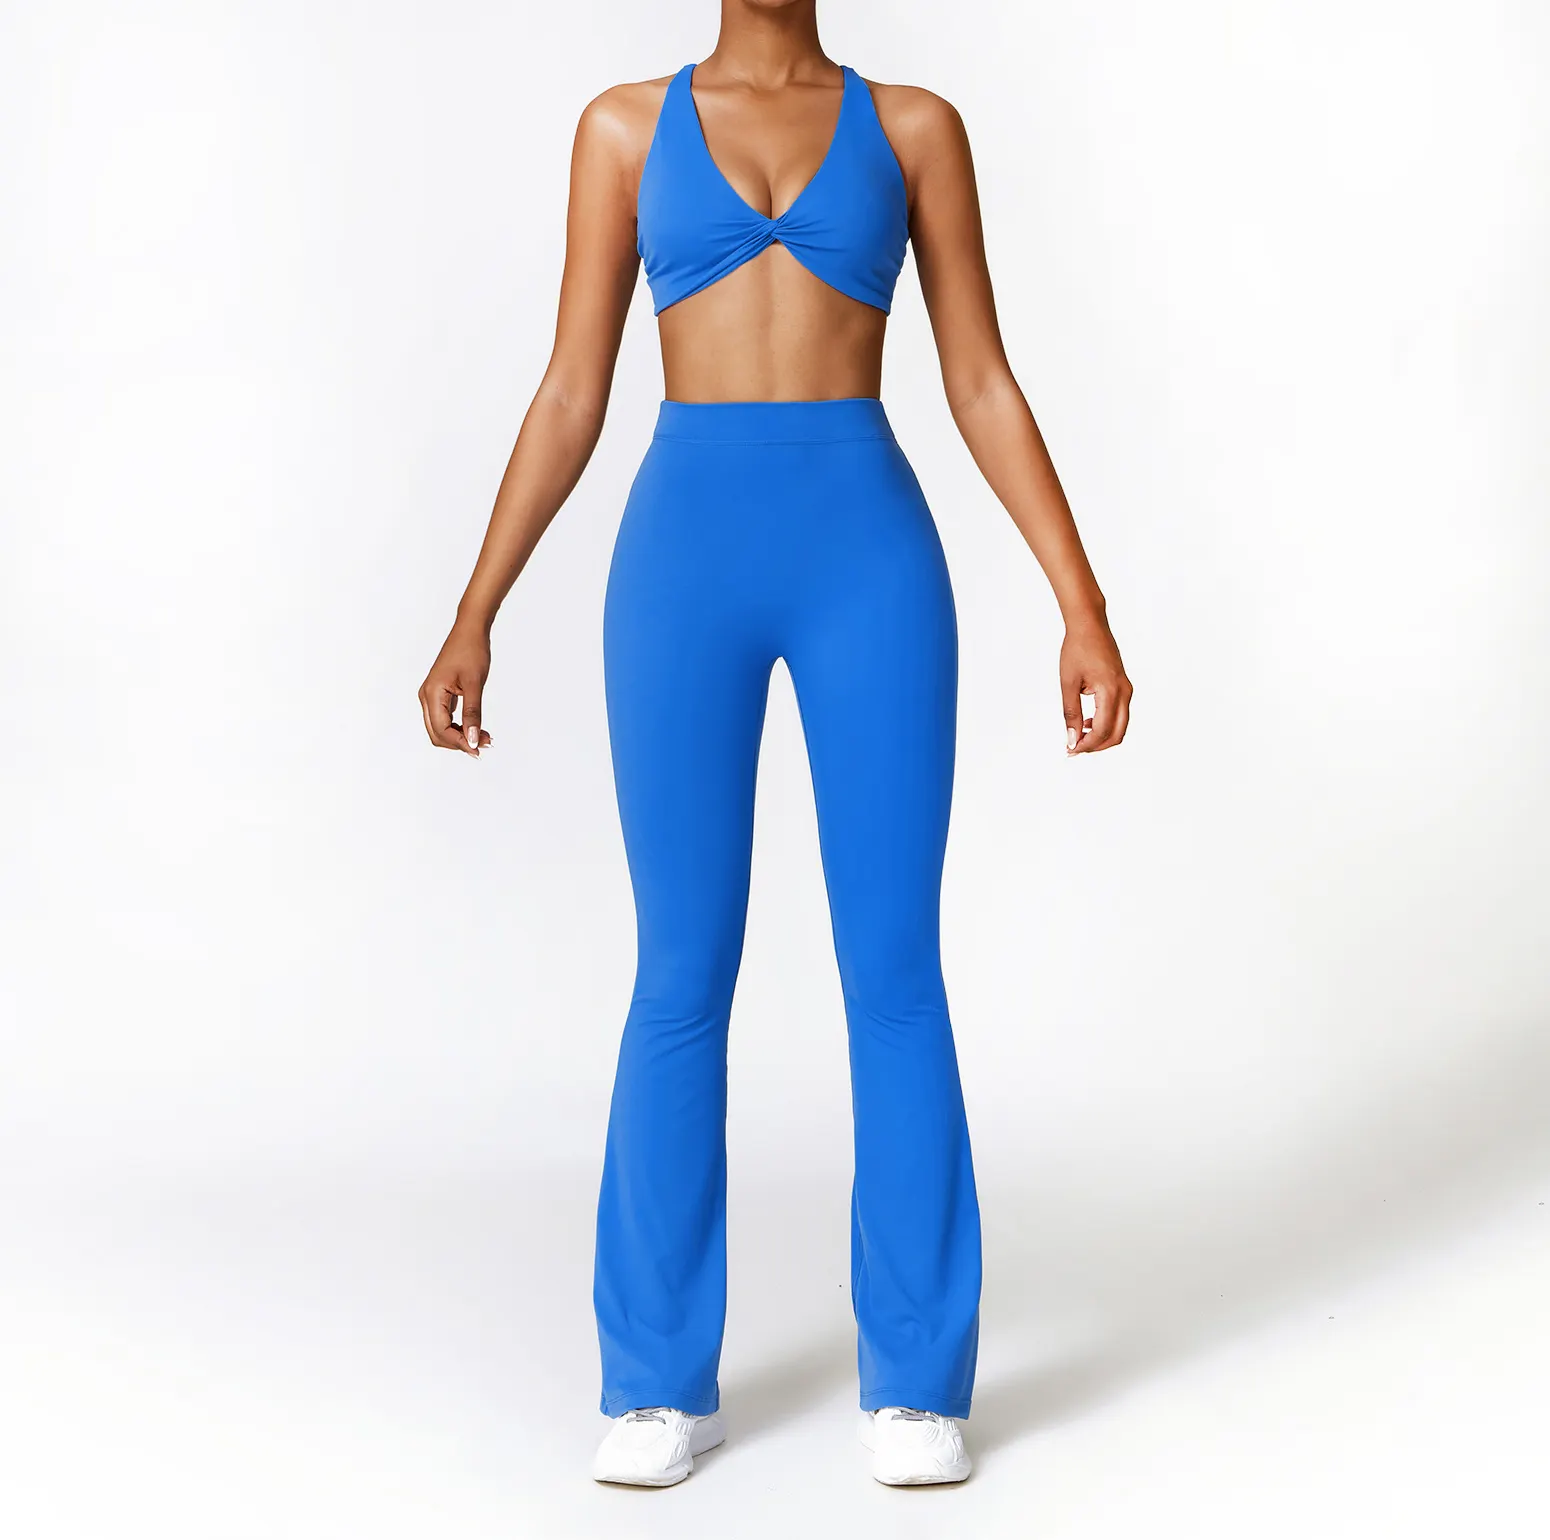 ओईएम डिज़ाइन एथलेटिक महिला फिटनेस परिधान योगा वियर जिम कपड़े सक्रिय परिधान खेल महिला जिम योगा सेट